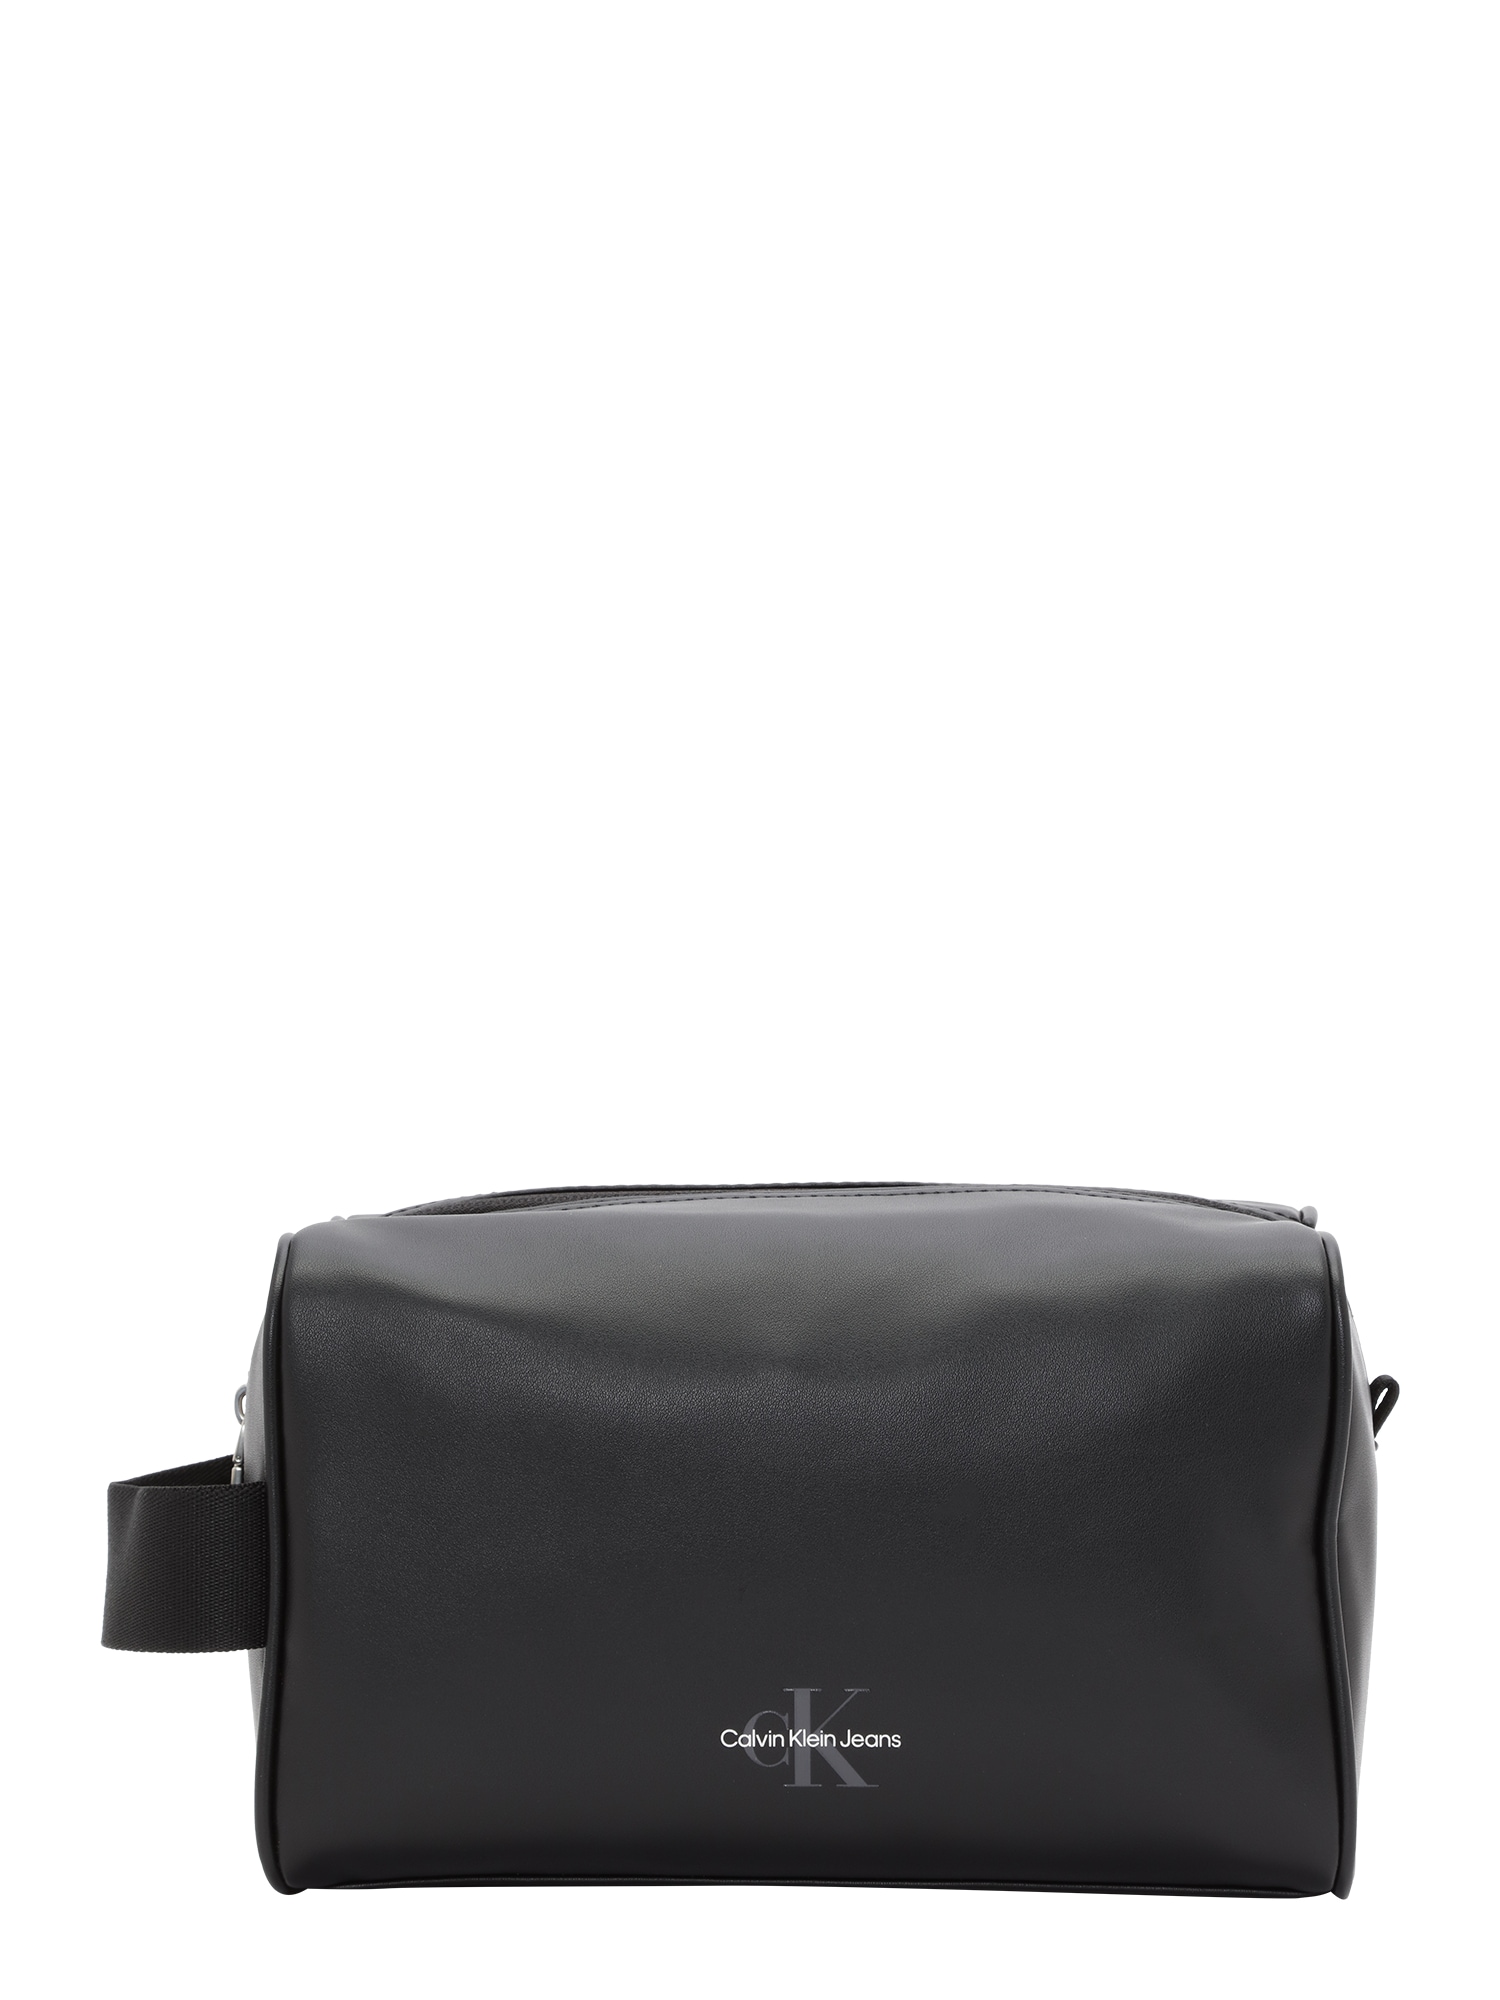 Calvin Klein Jeans Tuoleto reikmenų krepšys 'MONOGRAM' pilka / juoda / balta